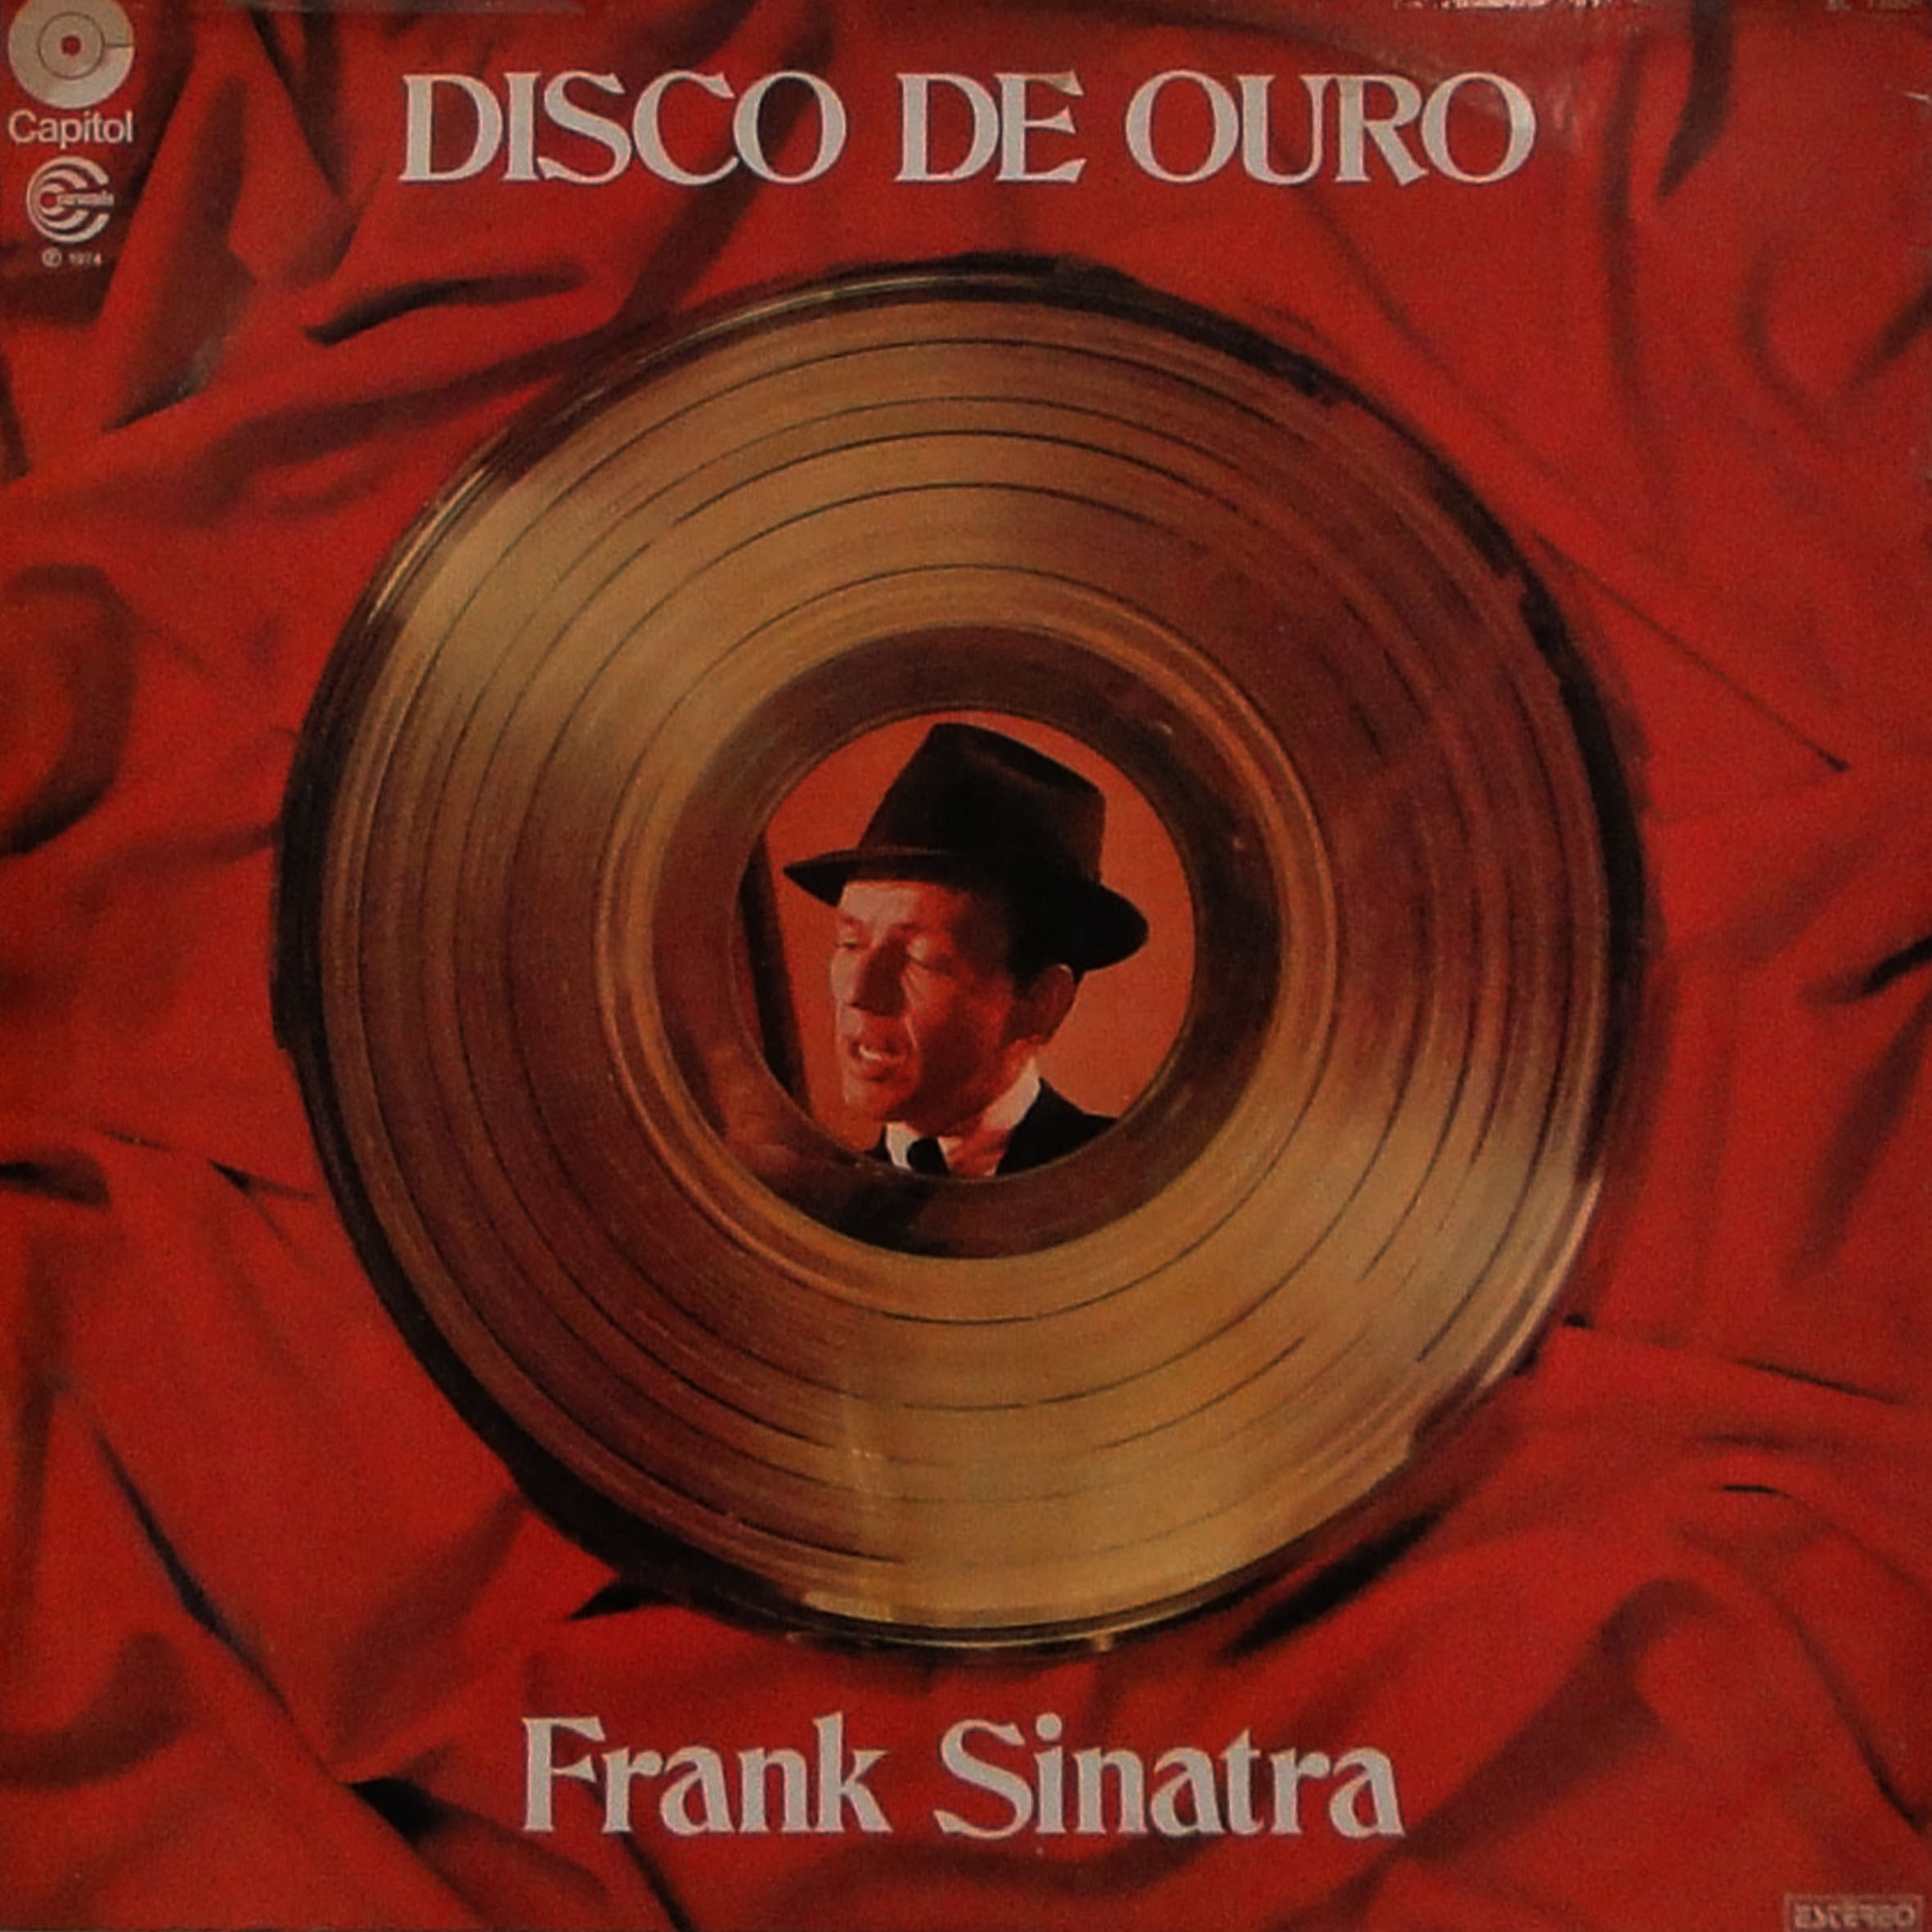 Vinil - Frank Sinatra - O Disco de Ouro